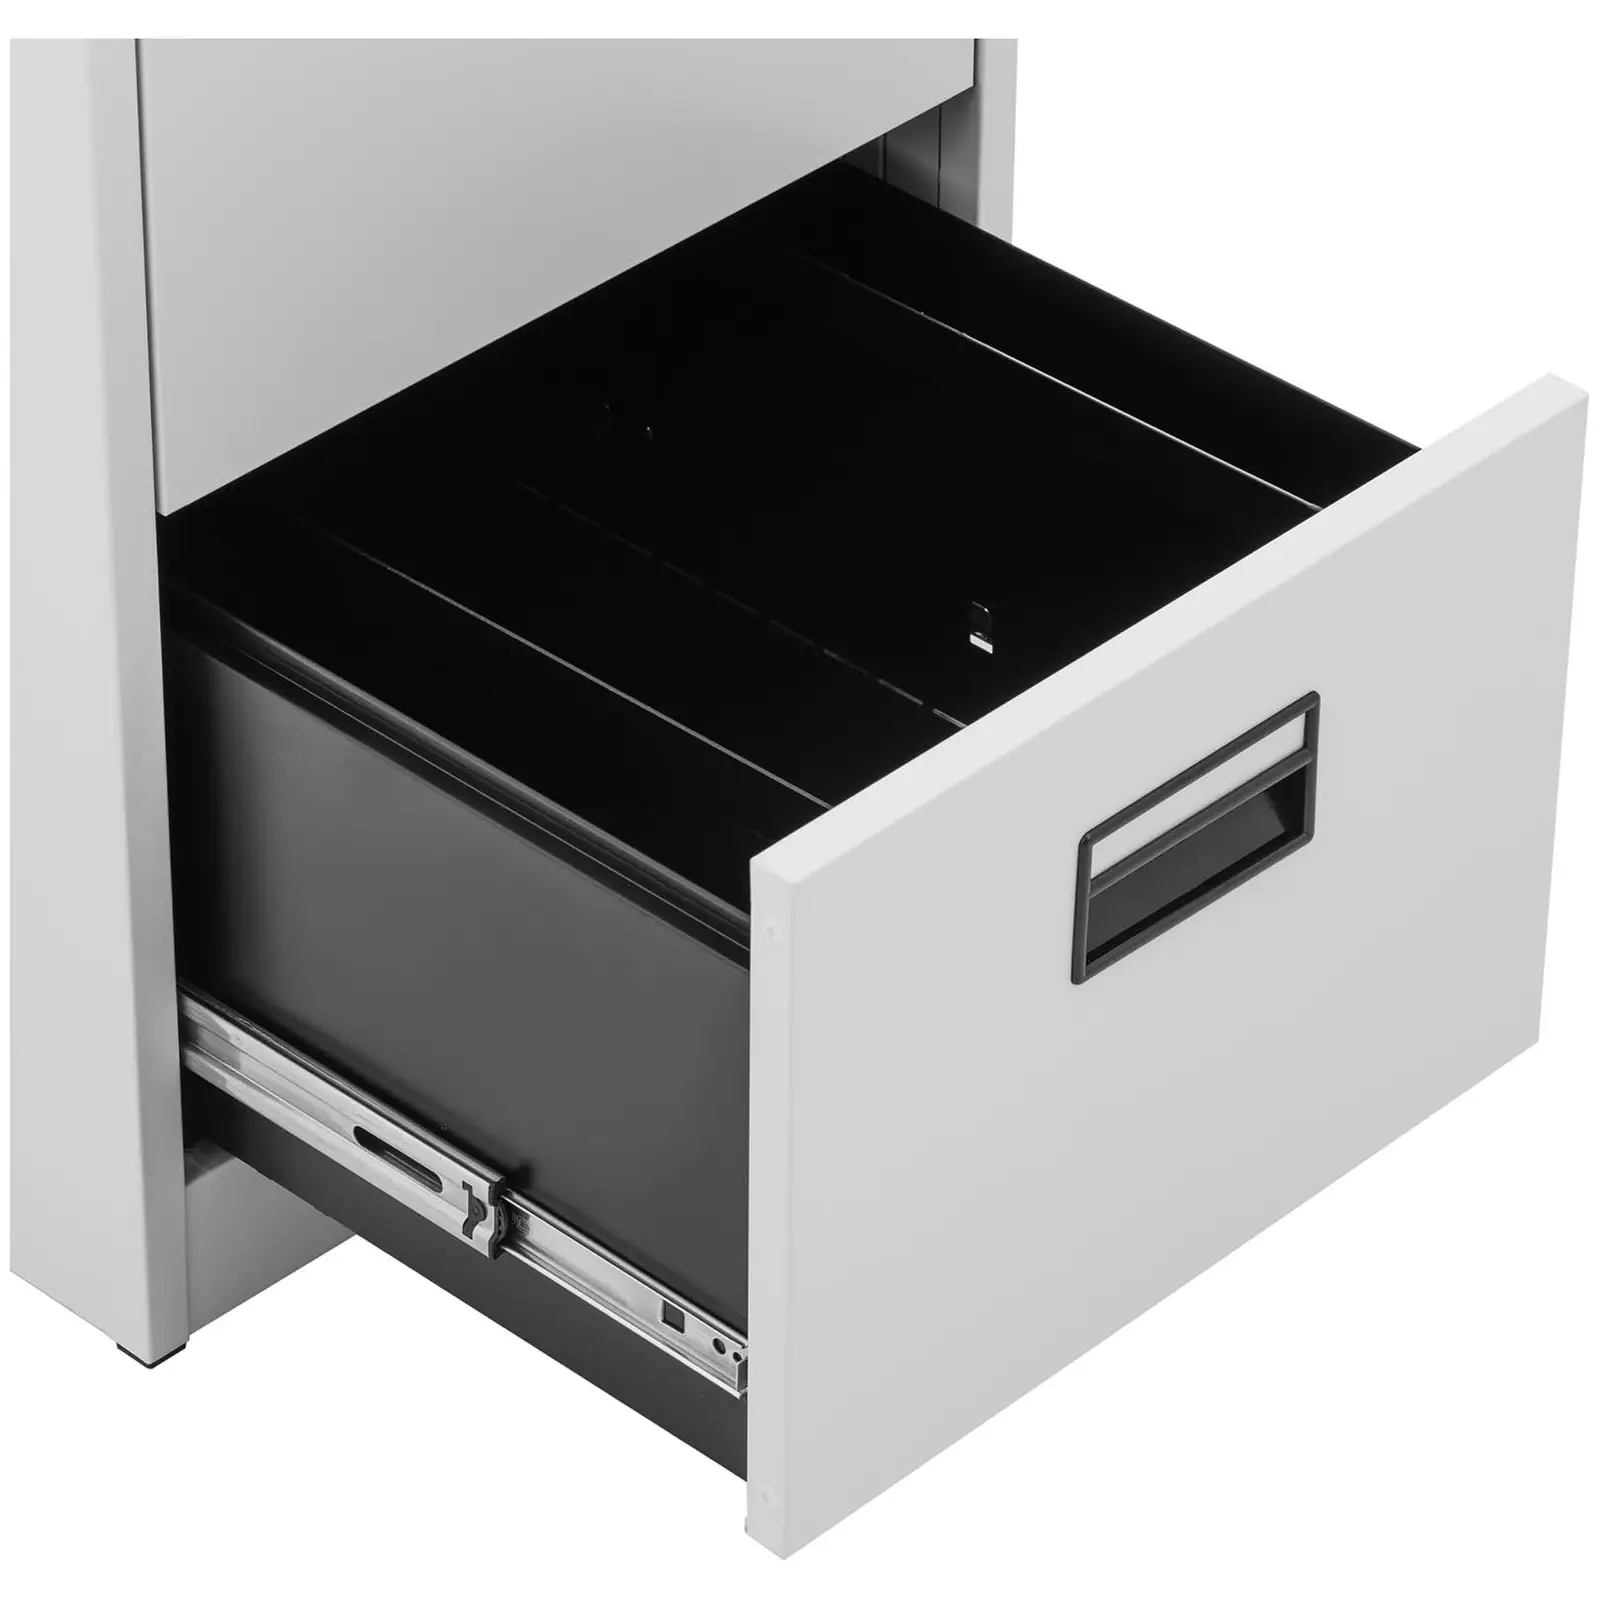 Suspension File Cabinet - lockable - 132 cm - 4 drawers